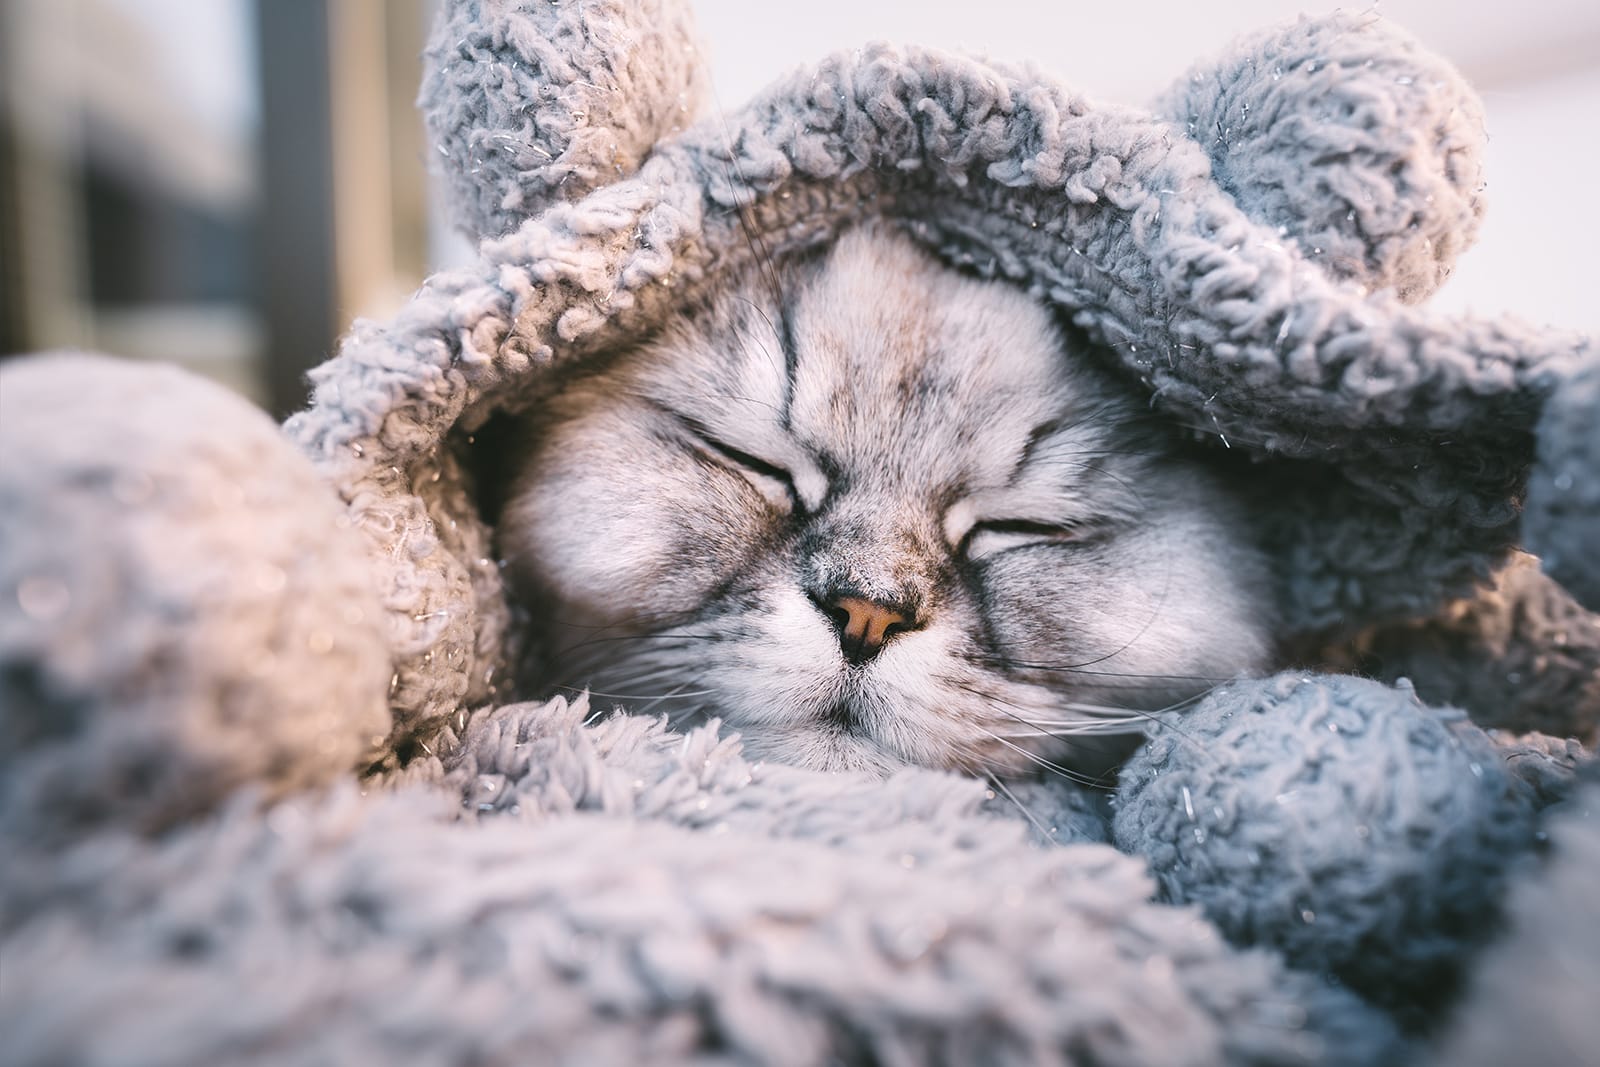 Kitten snuggled up keeping warm.